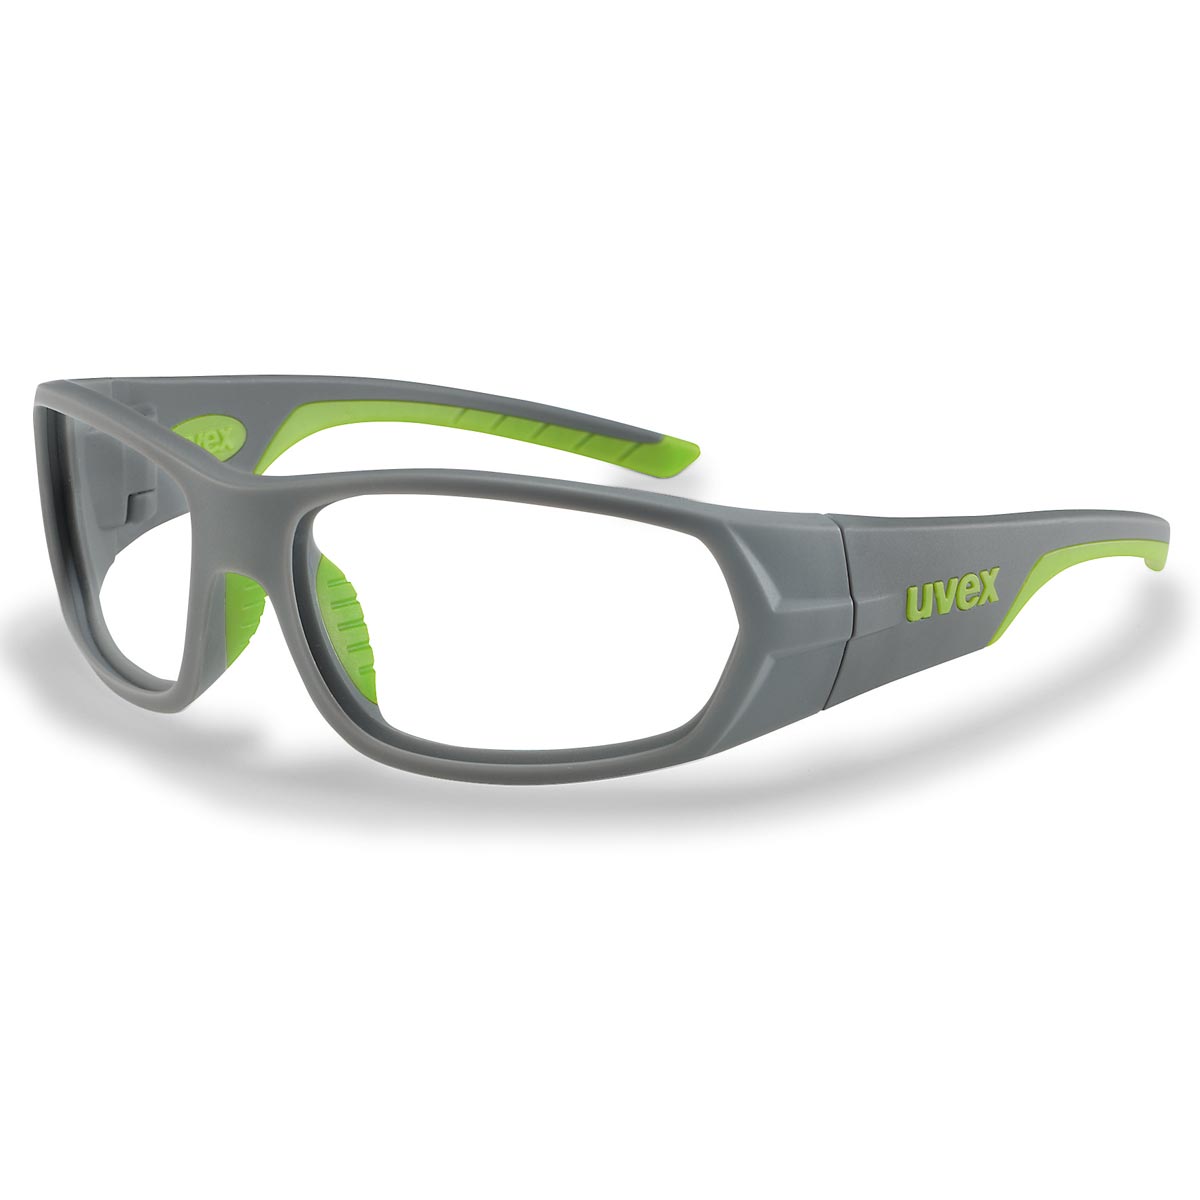 Uvex prescription safety glasses RX sp 5513